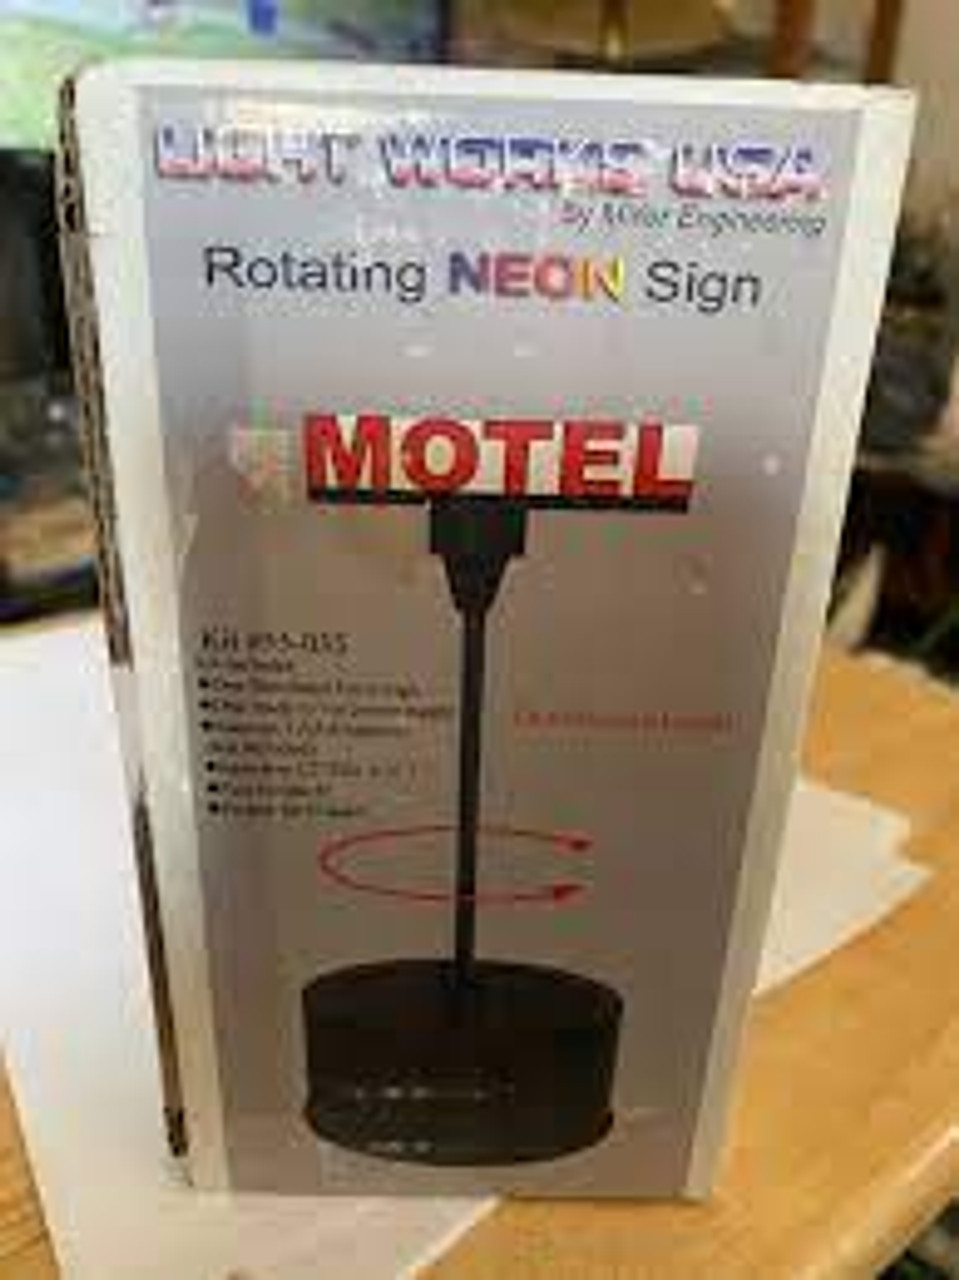 Miller Engineering 55-035 Motel Rotating Sign packaging